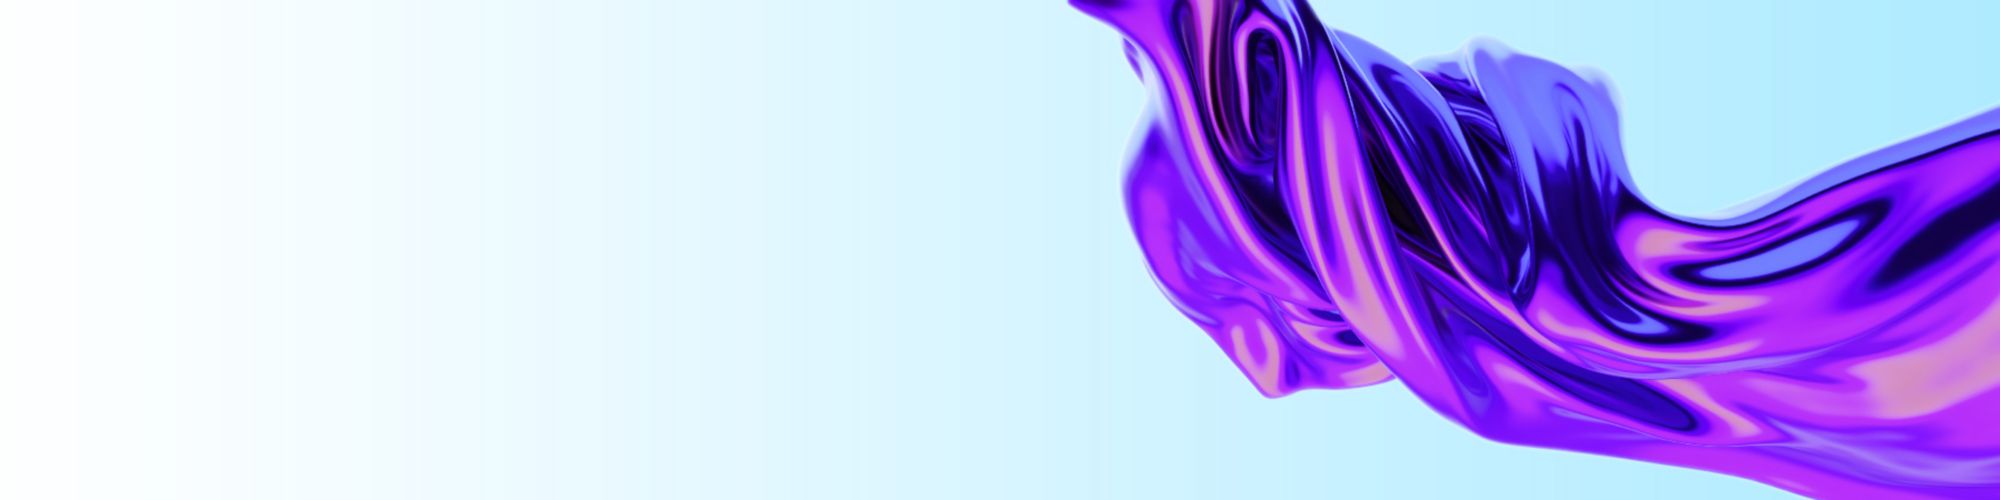 Purple vortex abstract in light blue background